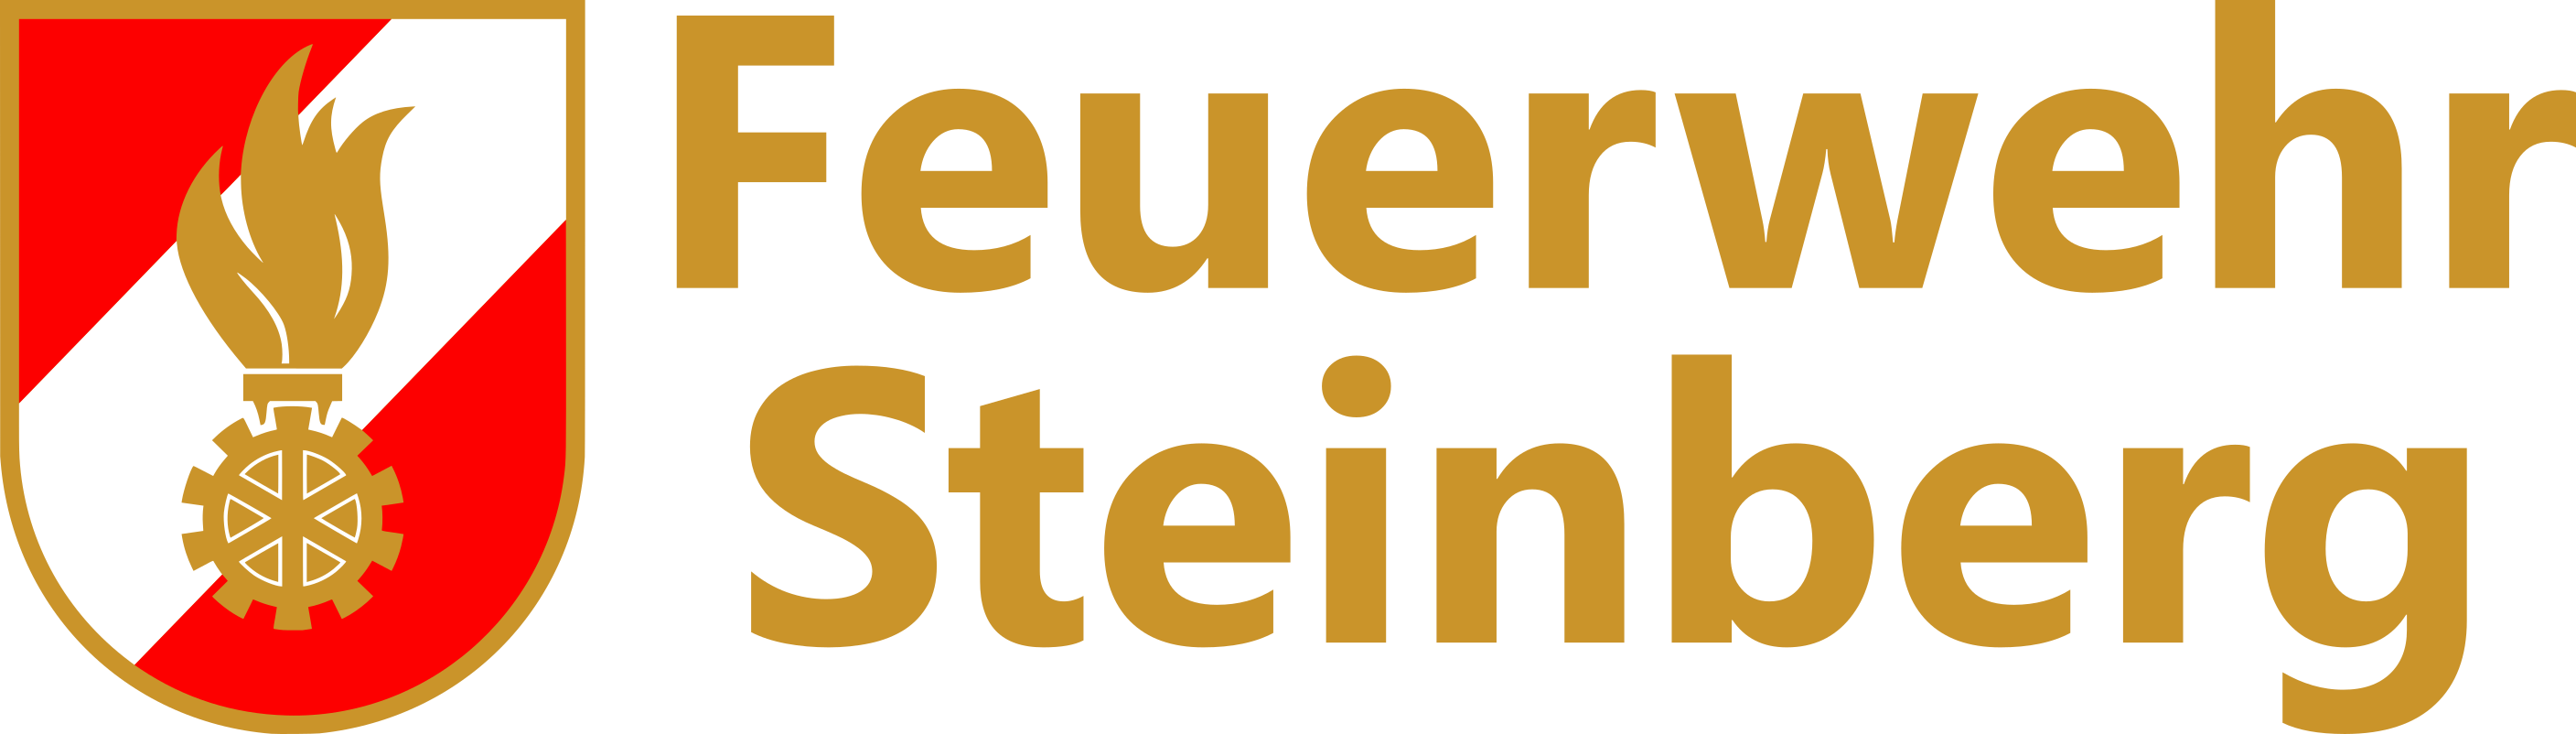 steinberg_gold_schriftzug_v1